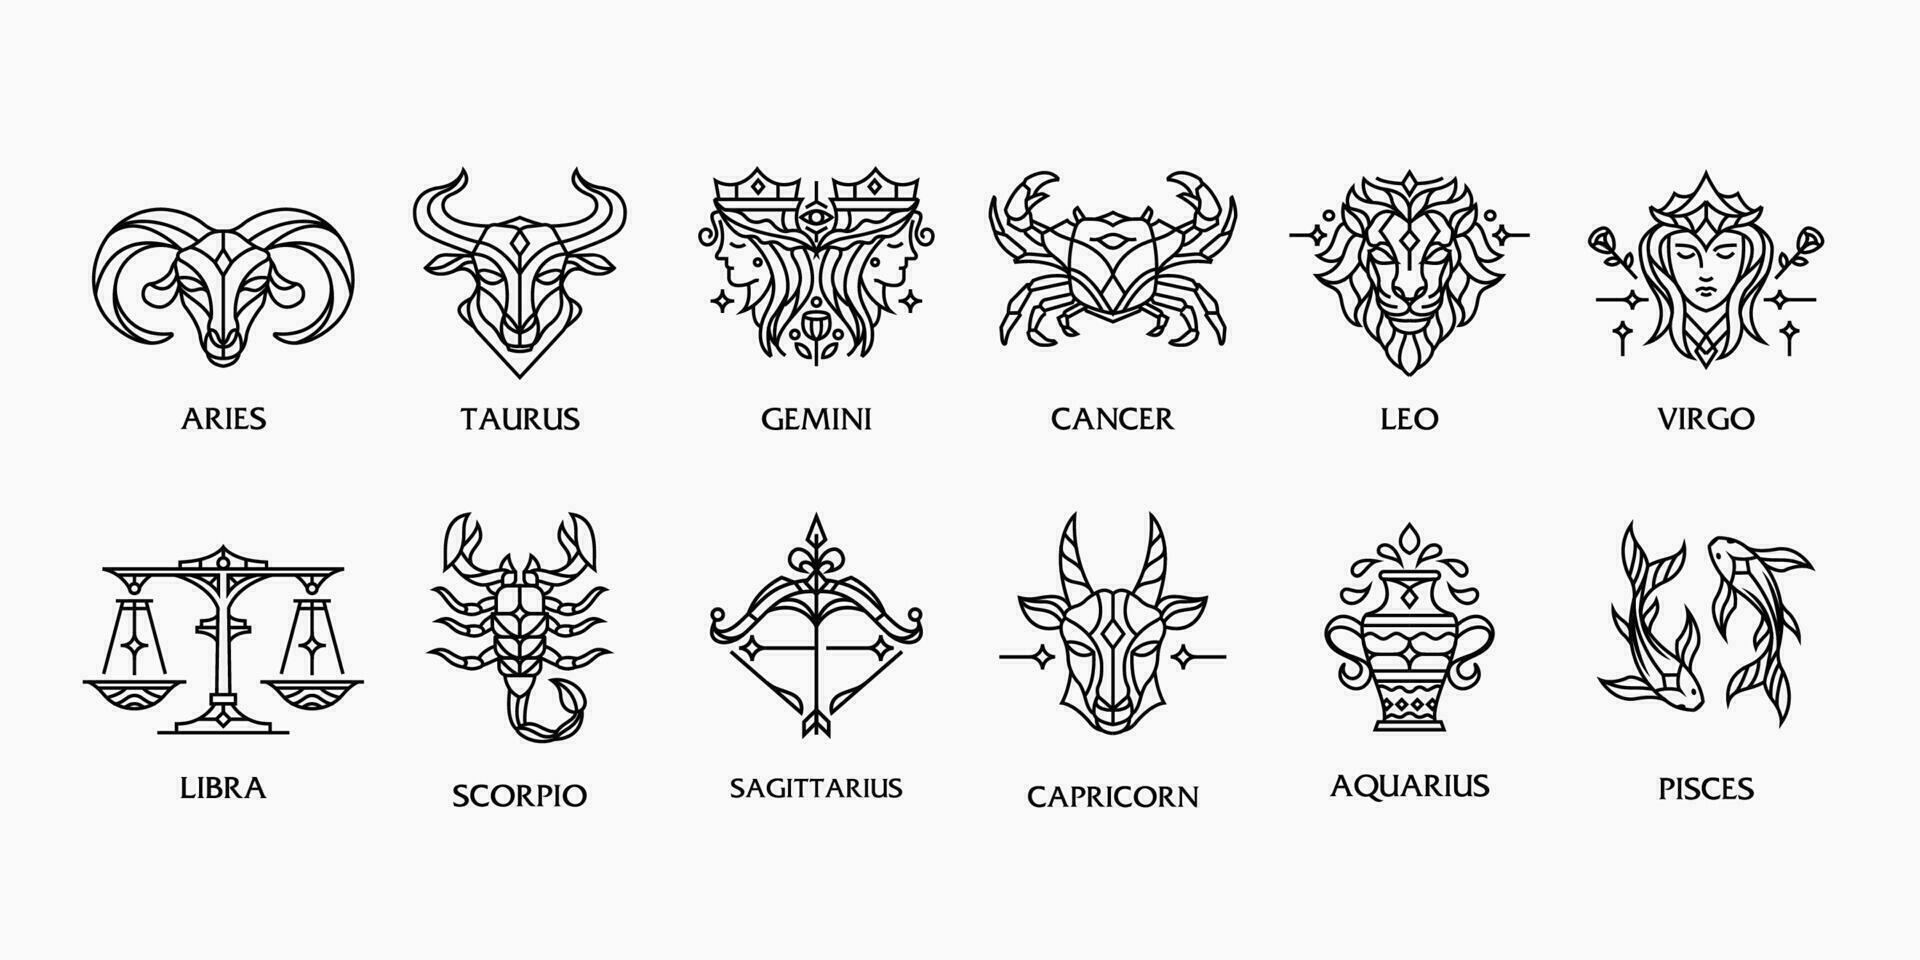 colección de zodíaco astrología señales en blanco antecedentes. moderno sencillo línea Arte de horóscopo astrológico iconos vector